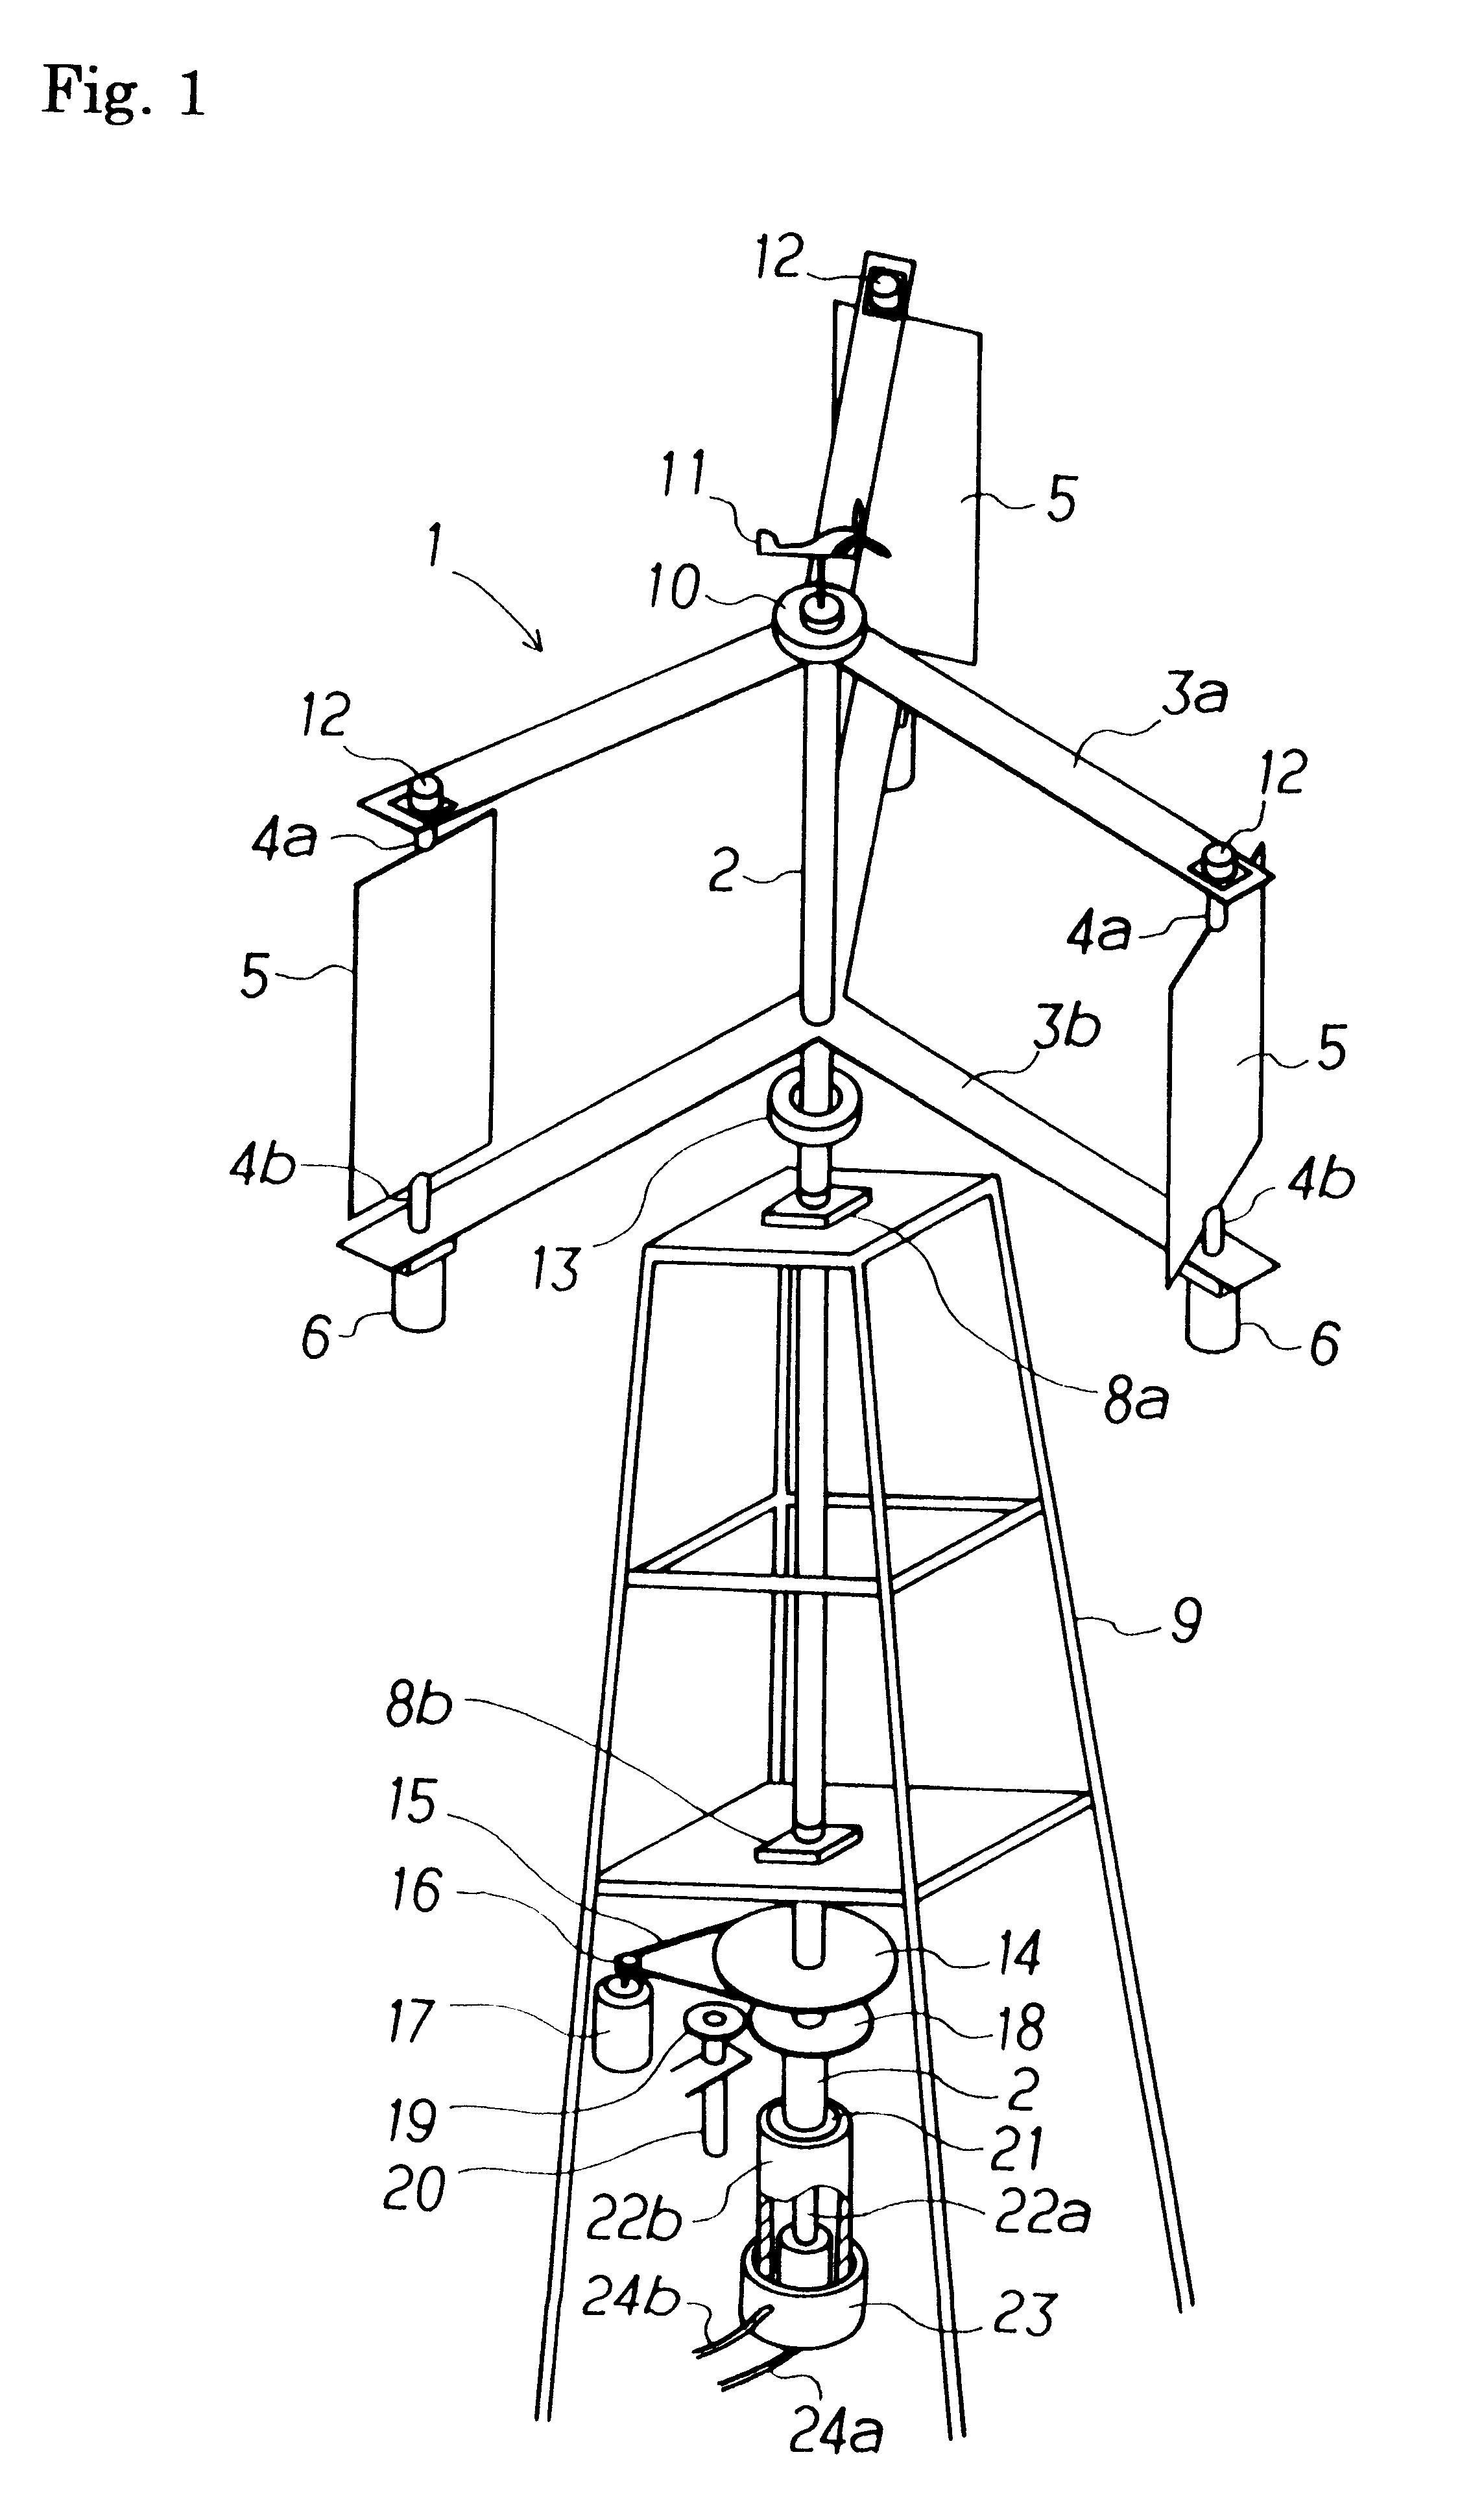 Windmill and windmill control method